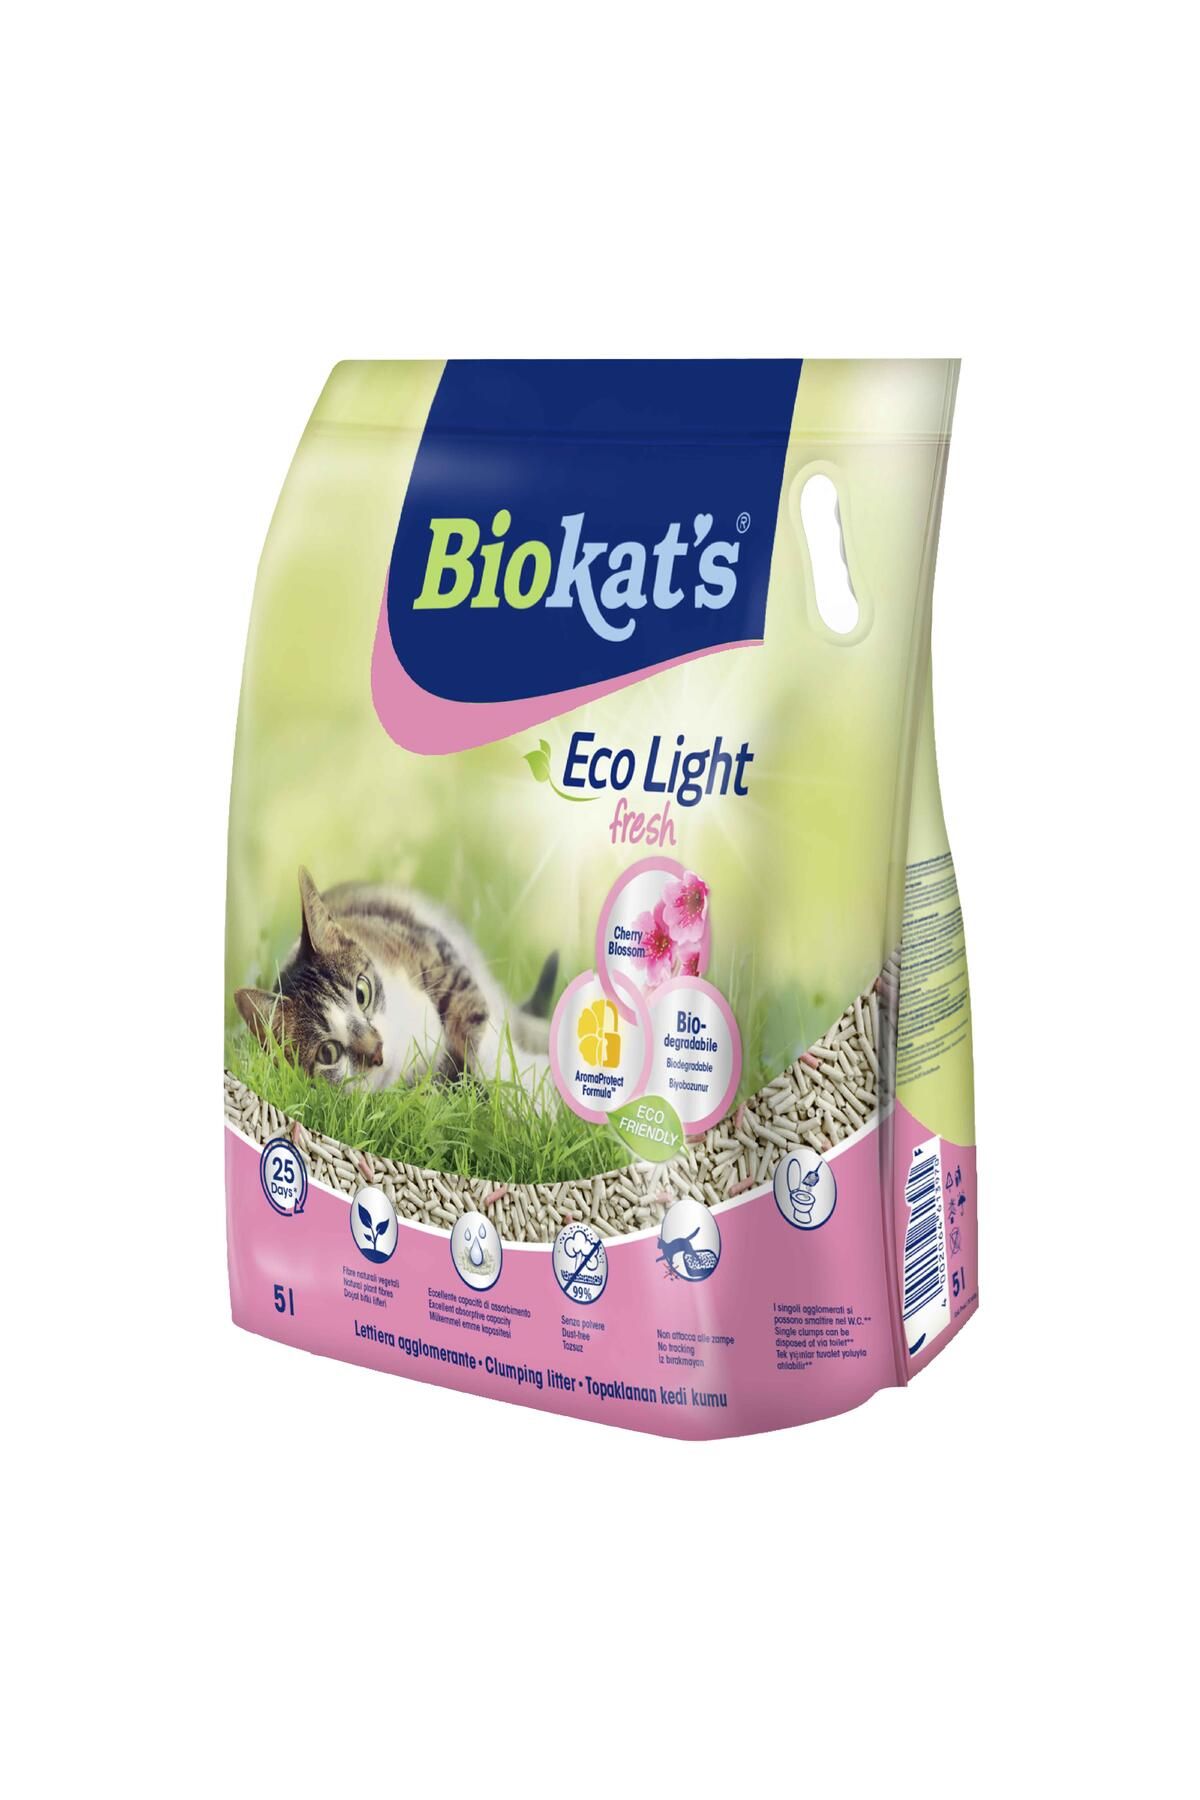 Biokat's Biokat's Eco Light Fresh Cherry Blossom (KİRAZ ÇİÇEĞİ KOKULU) Pelet Kedi Kumu 5 Lt